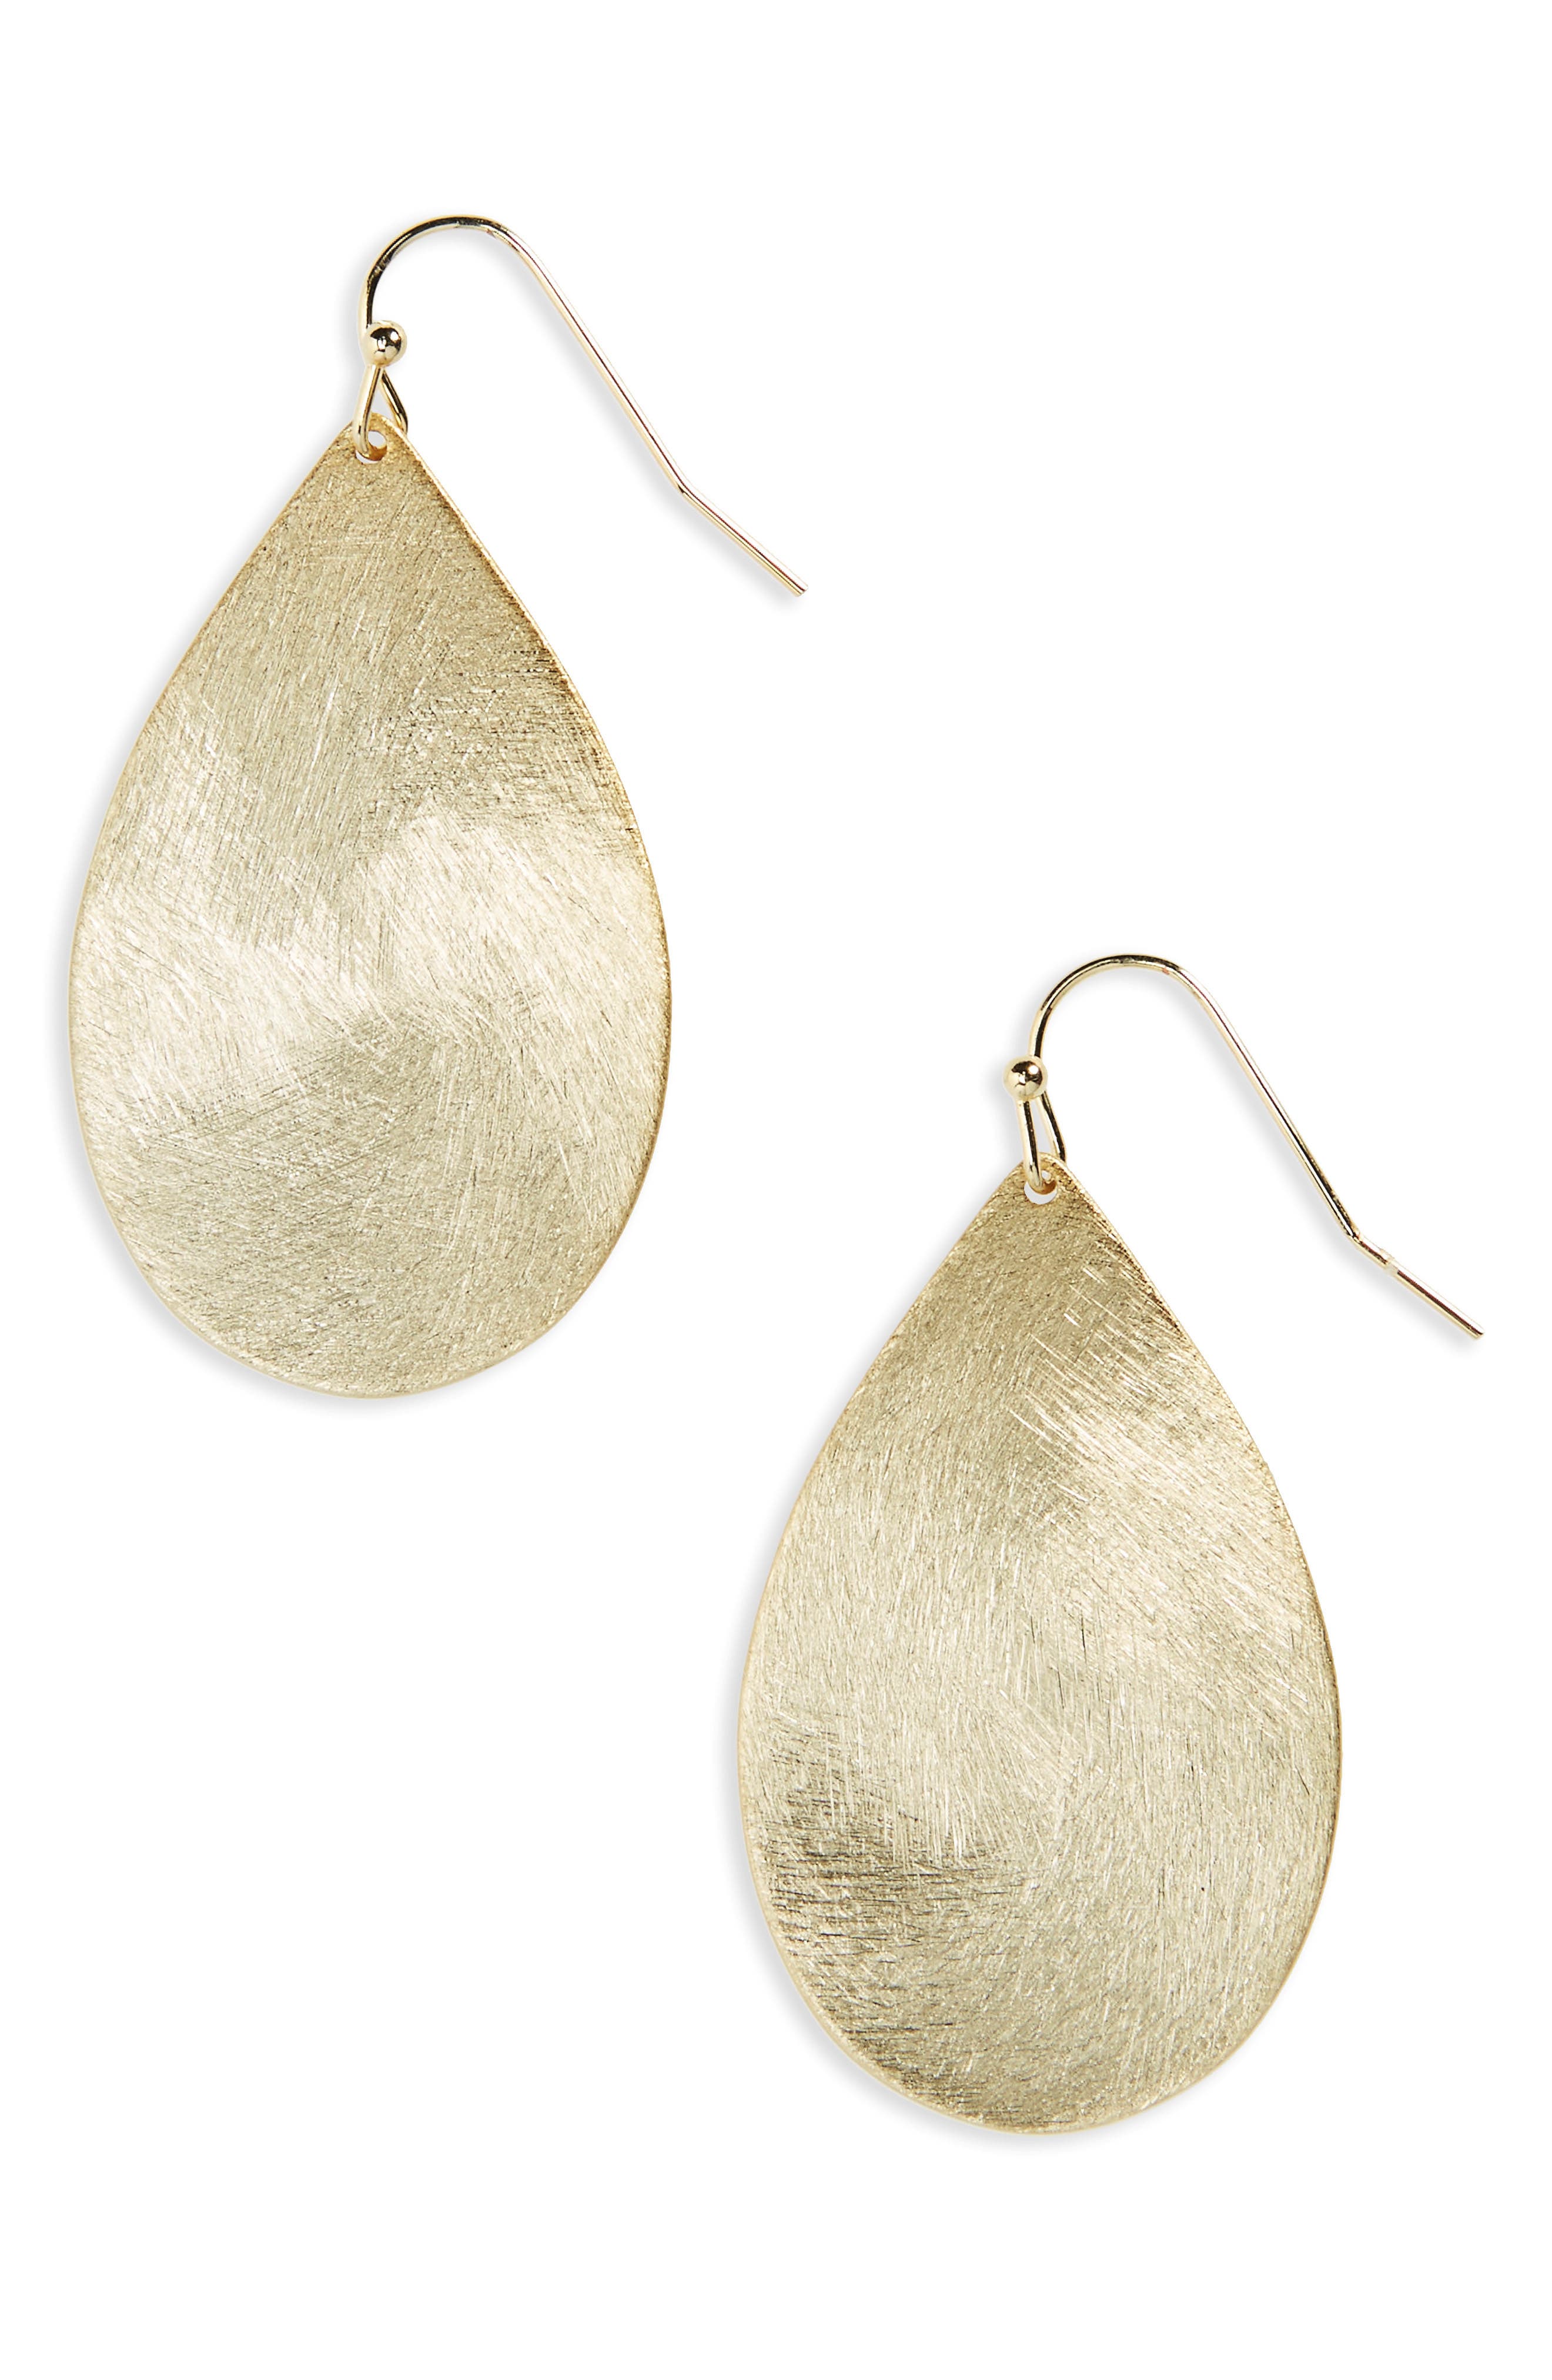 ATIMIGO Statement Drop Earrings Large Metal Geometric Gold Dangle Drop Earrings for Women Girls 6 Pairs